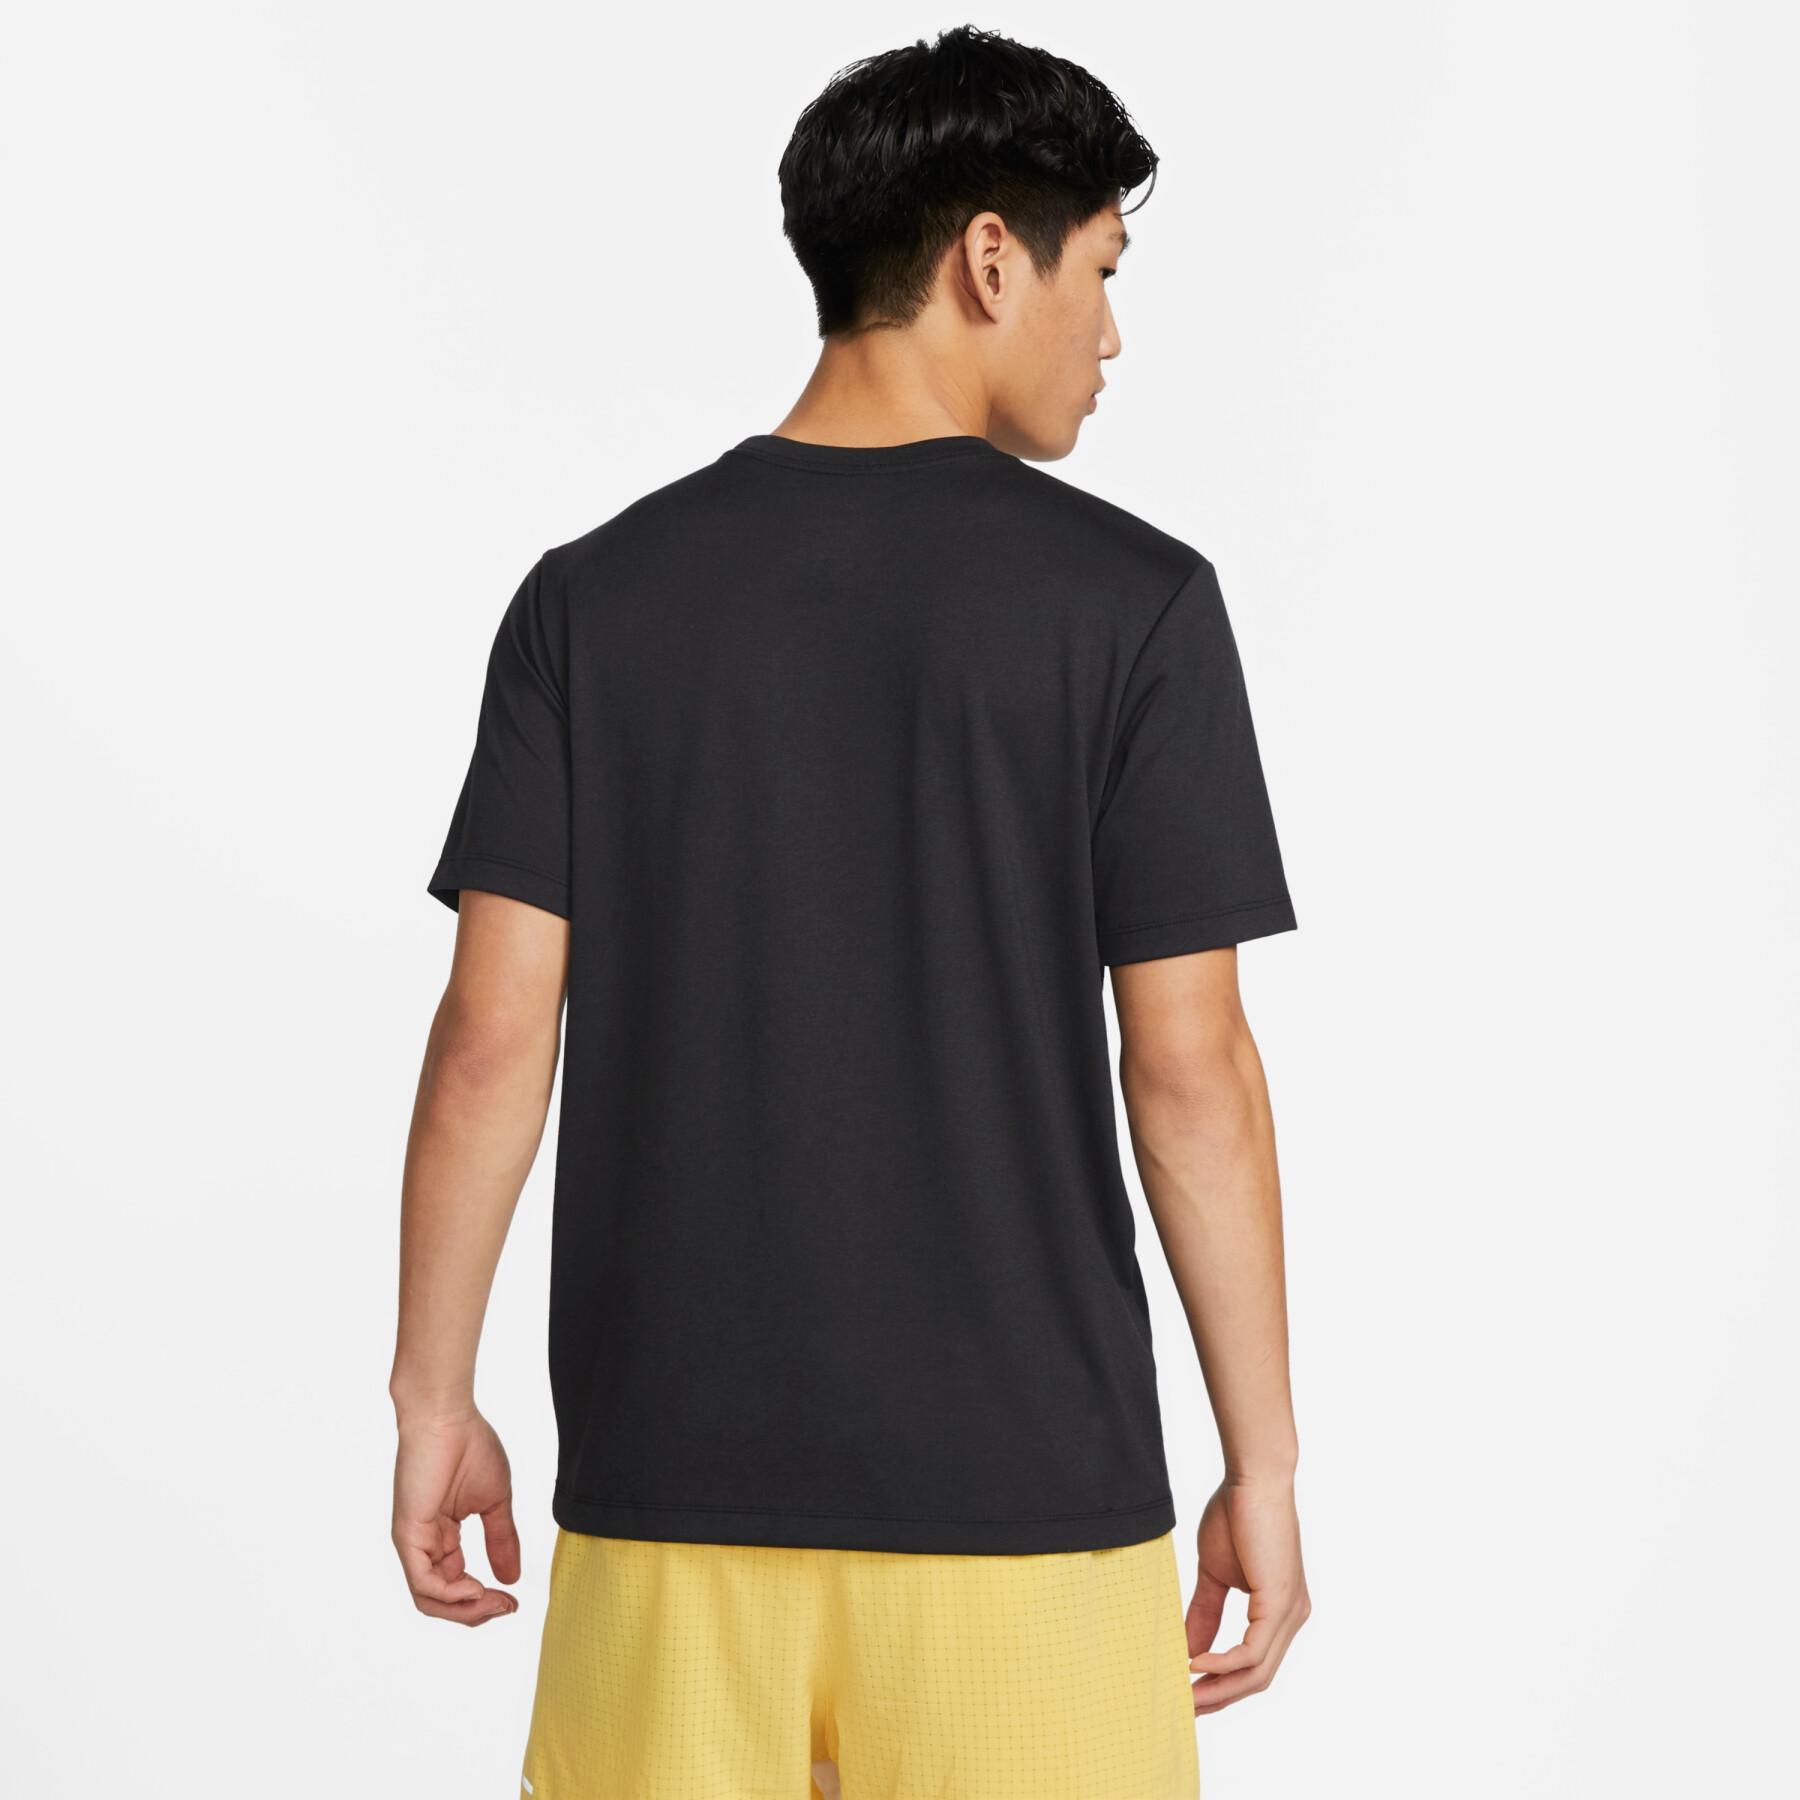 Camiseta Nike Dri-FIT Trail